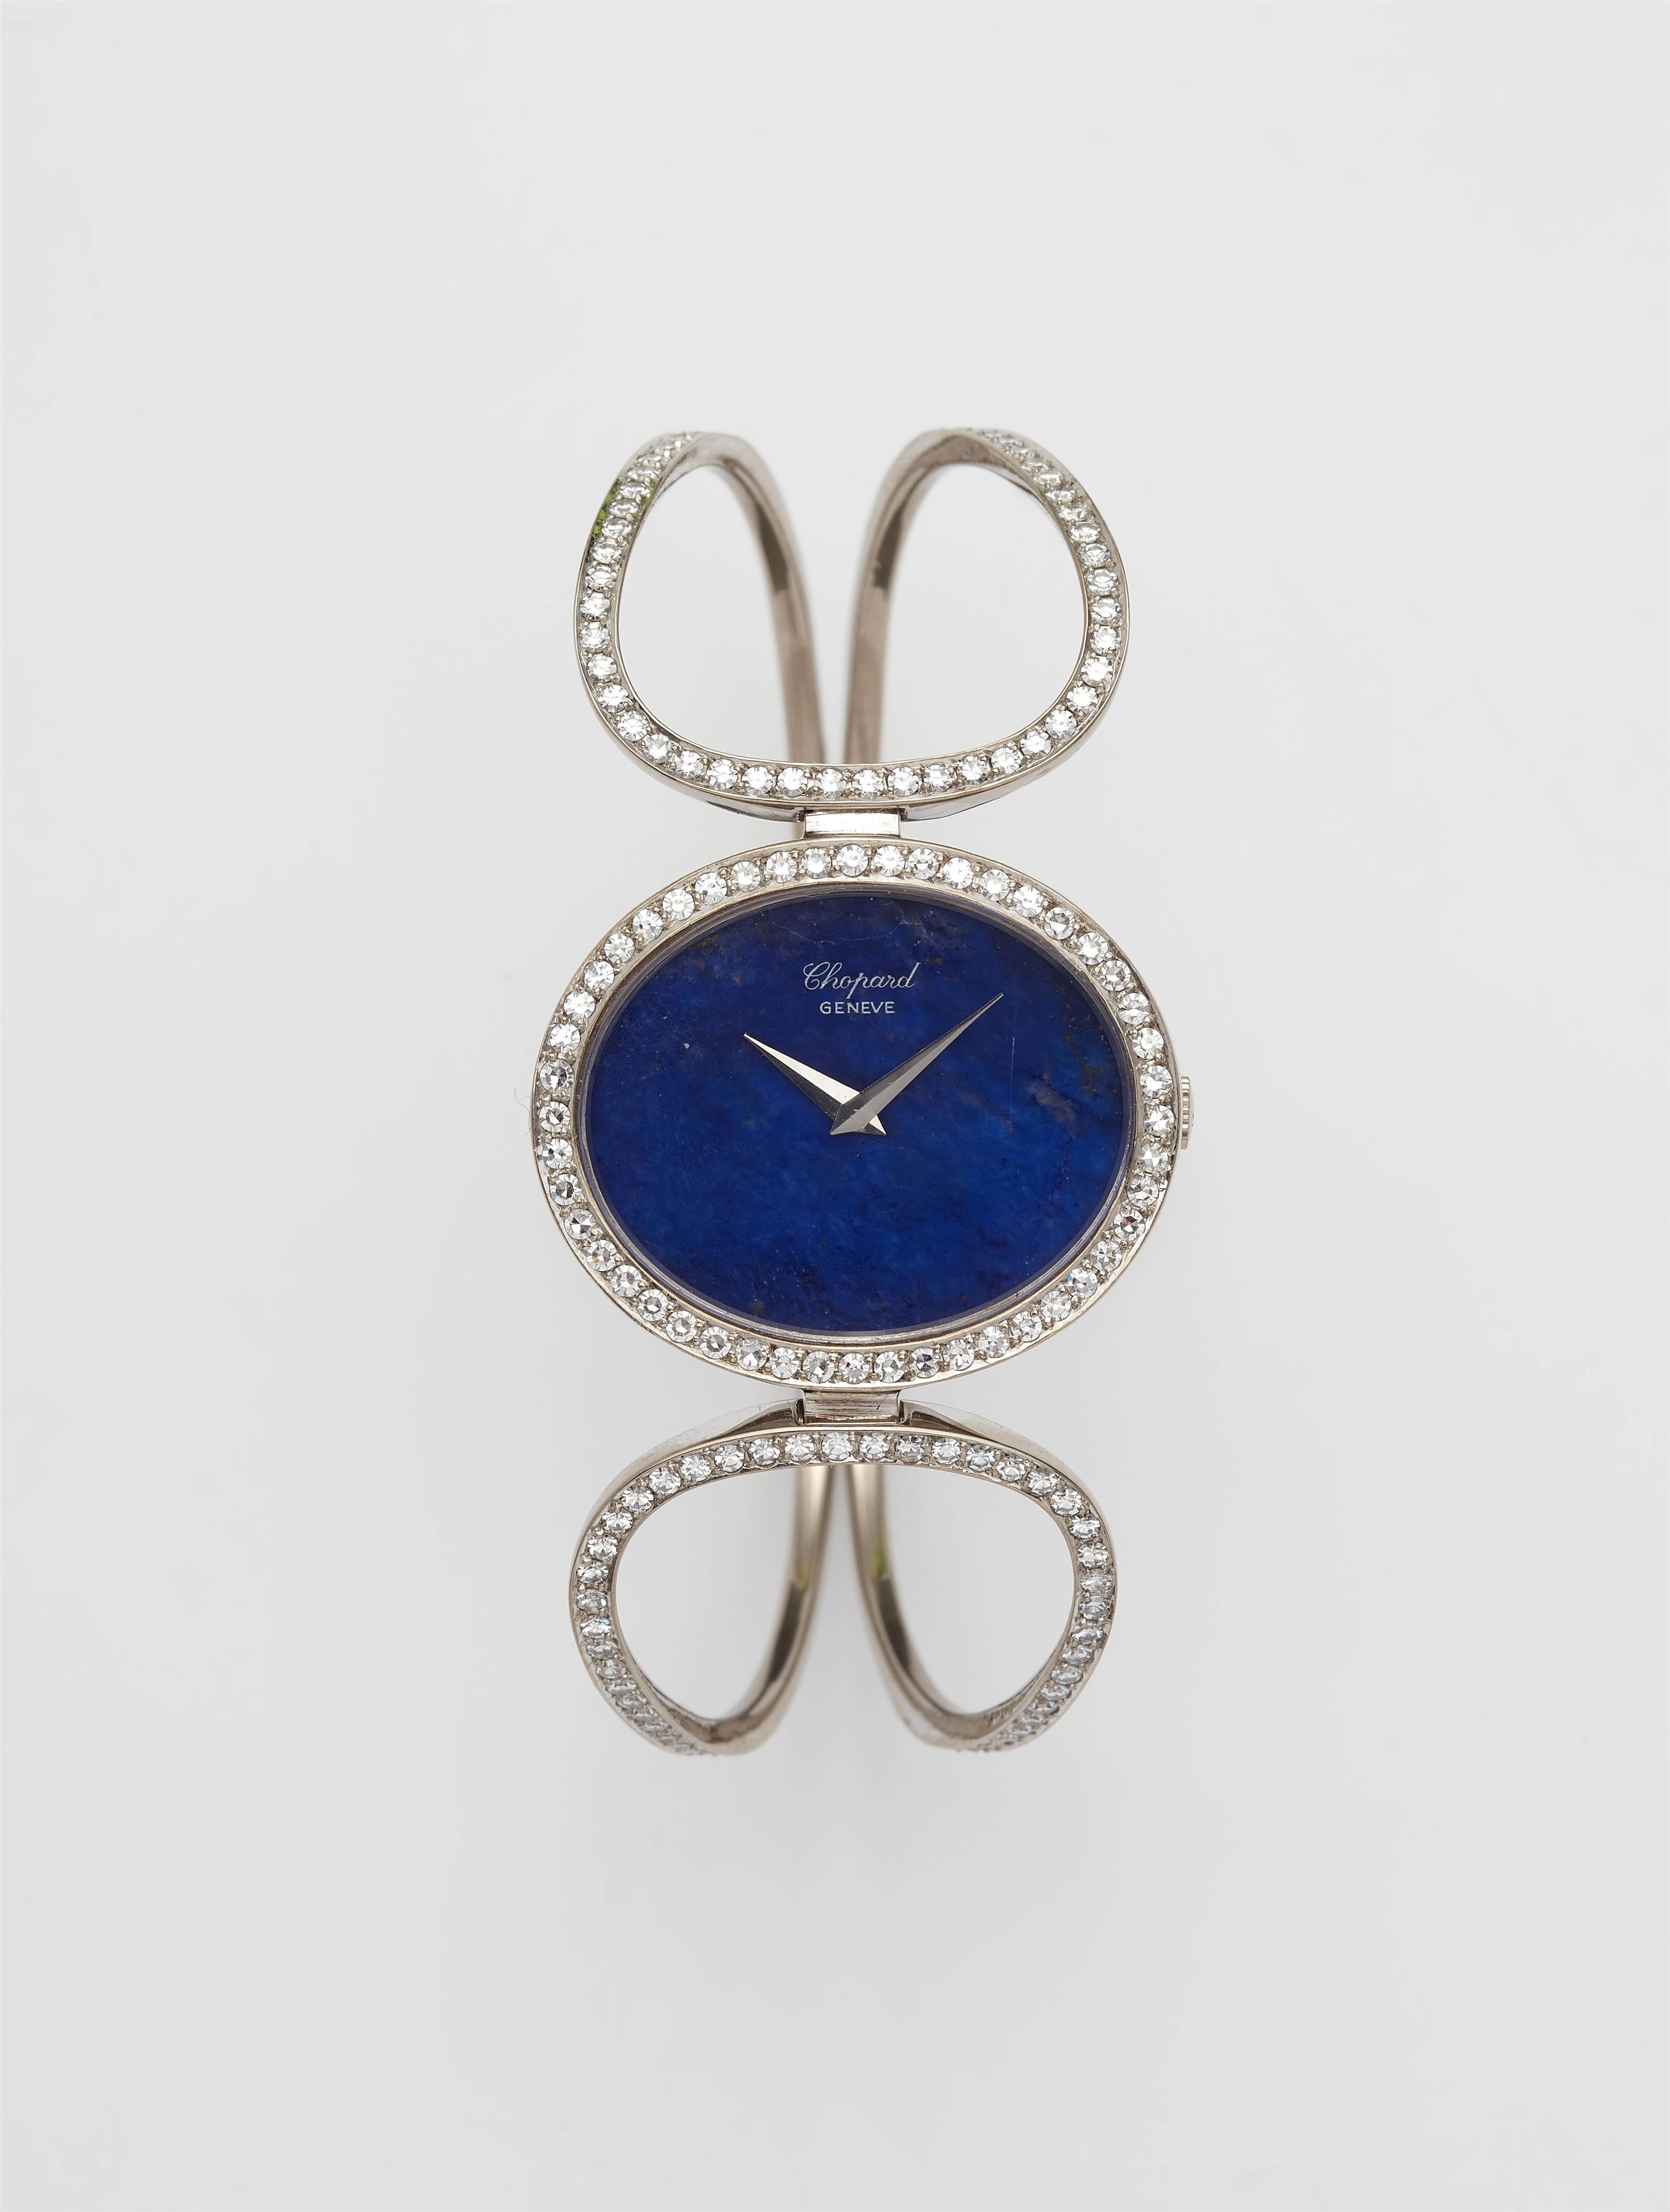 An 18k gold quartz Chopard lapis lazuli wristwatch - image-1